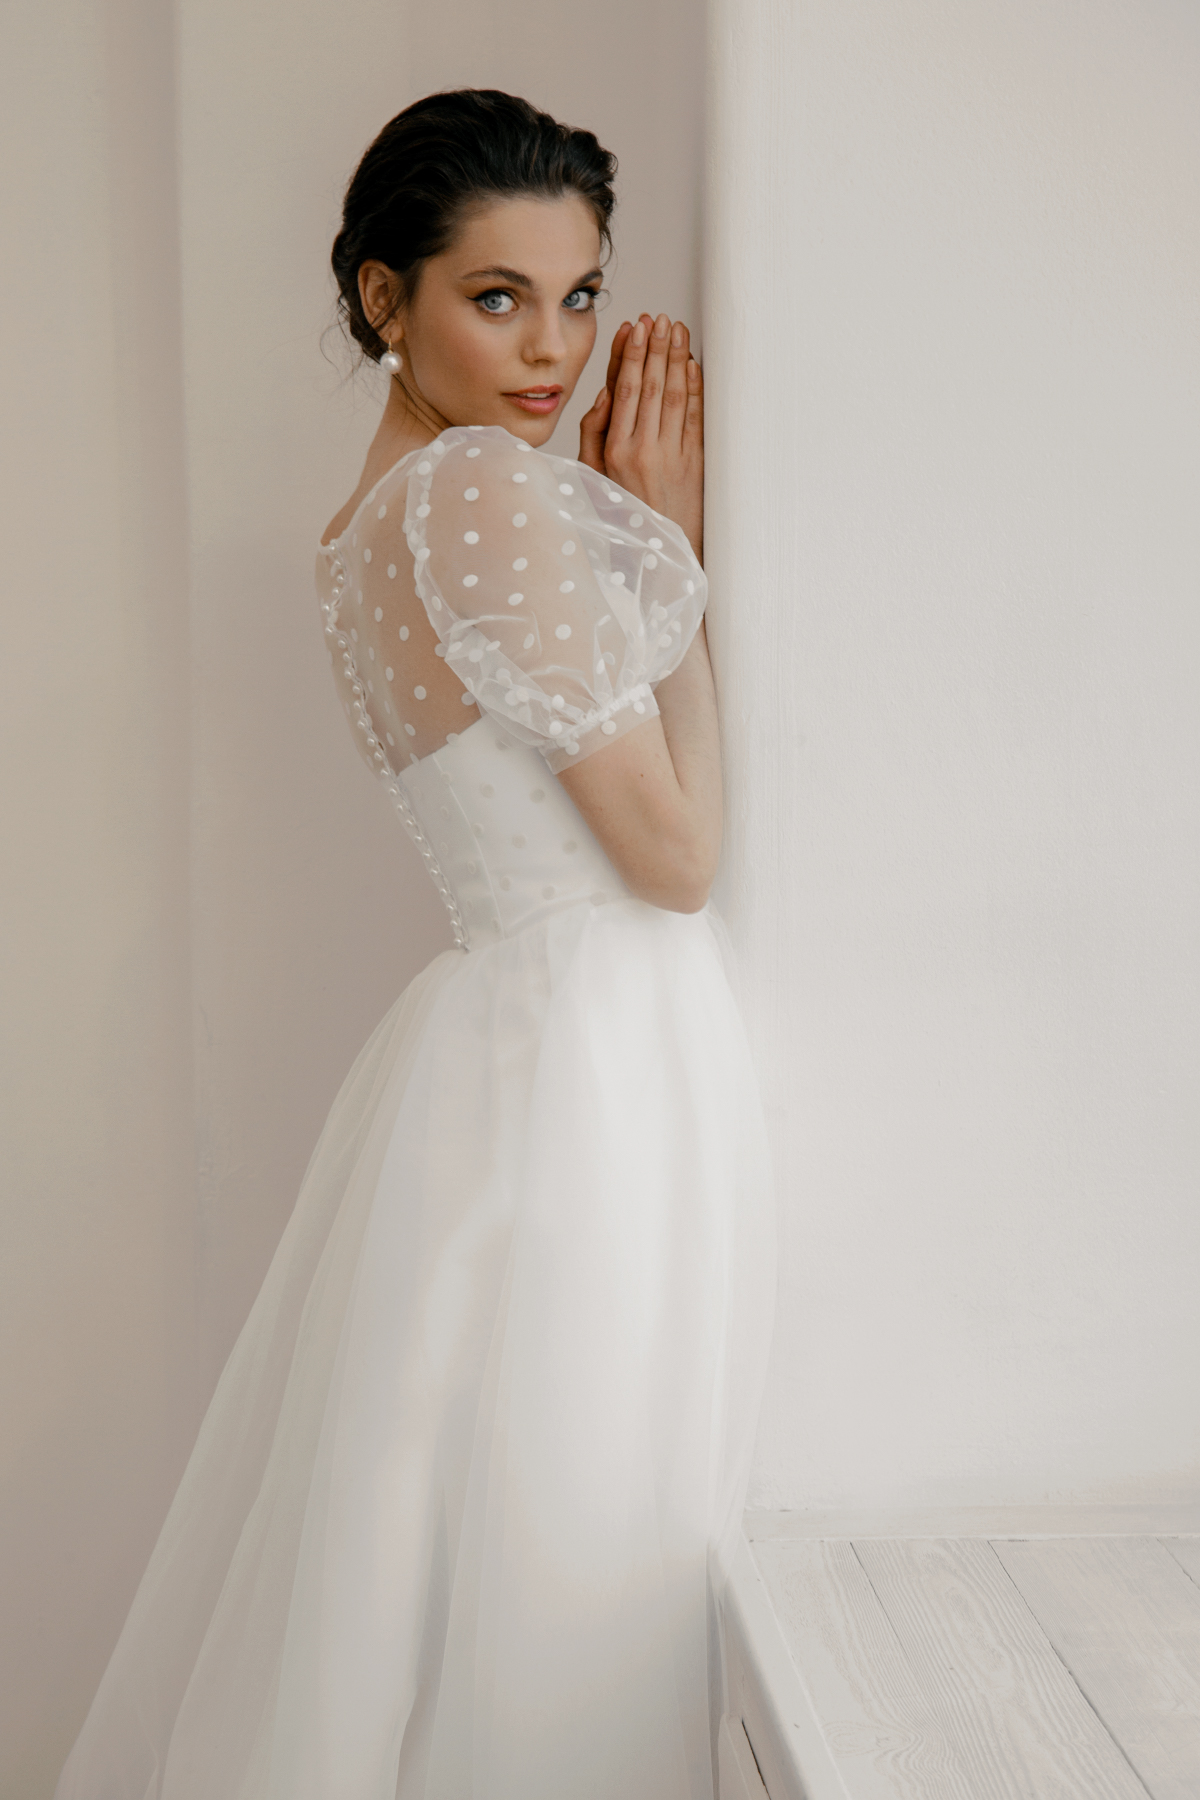 Short corset wedding dress with sleeves